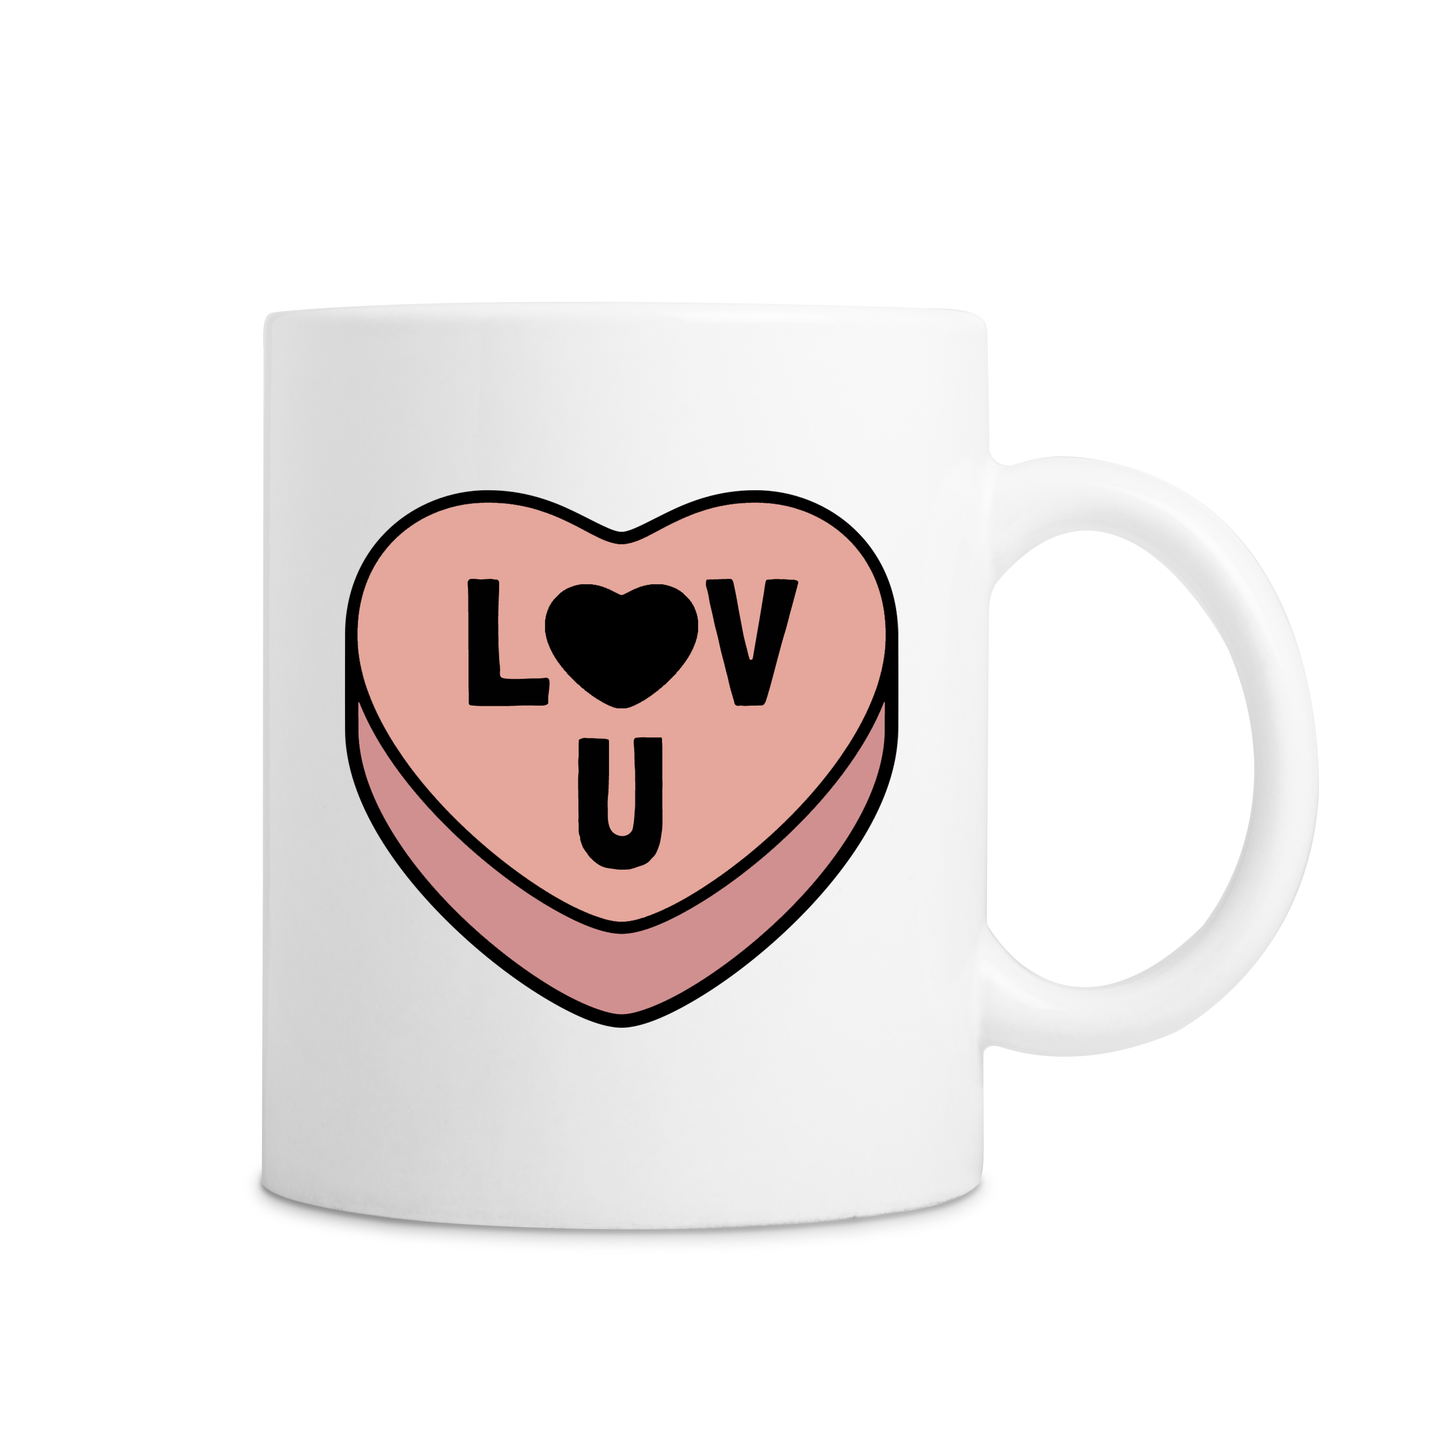 LOV U Peachy Heart Valentine's Day Mug & Sock Set